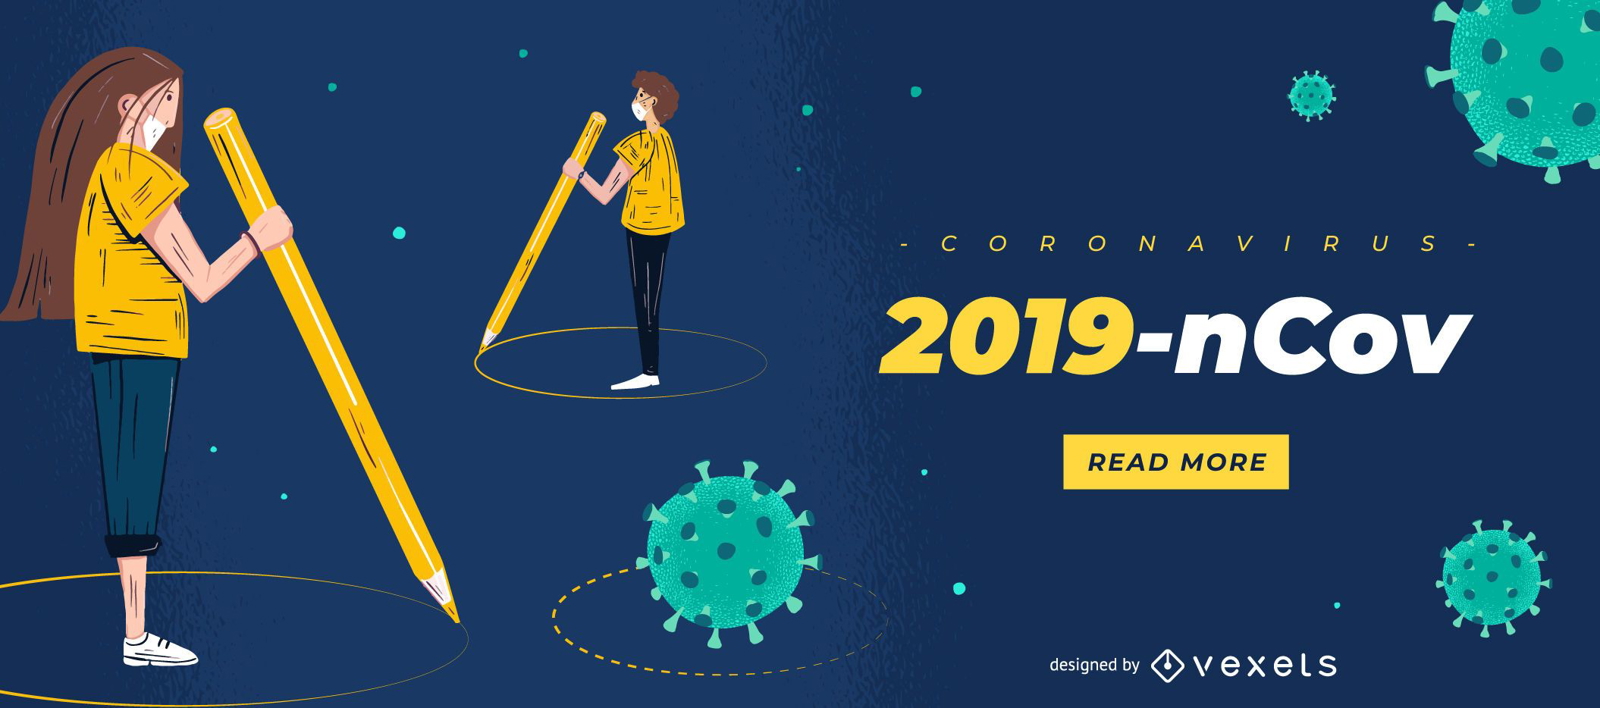 2019-ncov coronavirus slider template